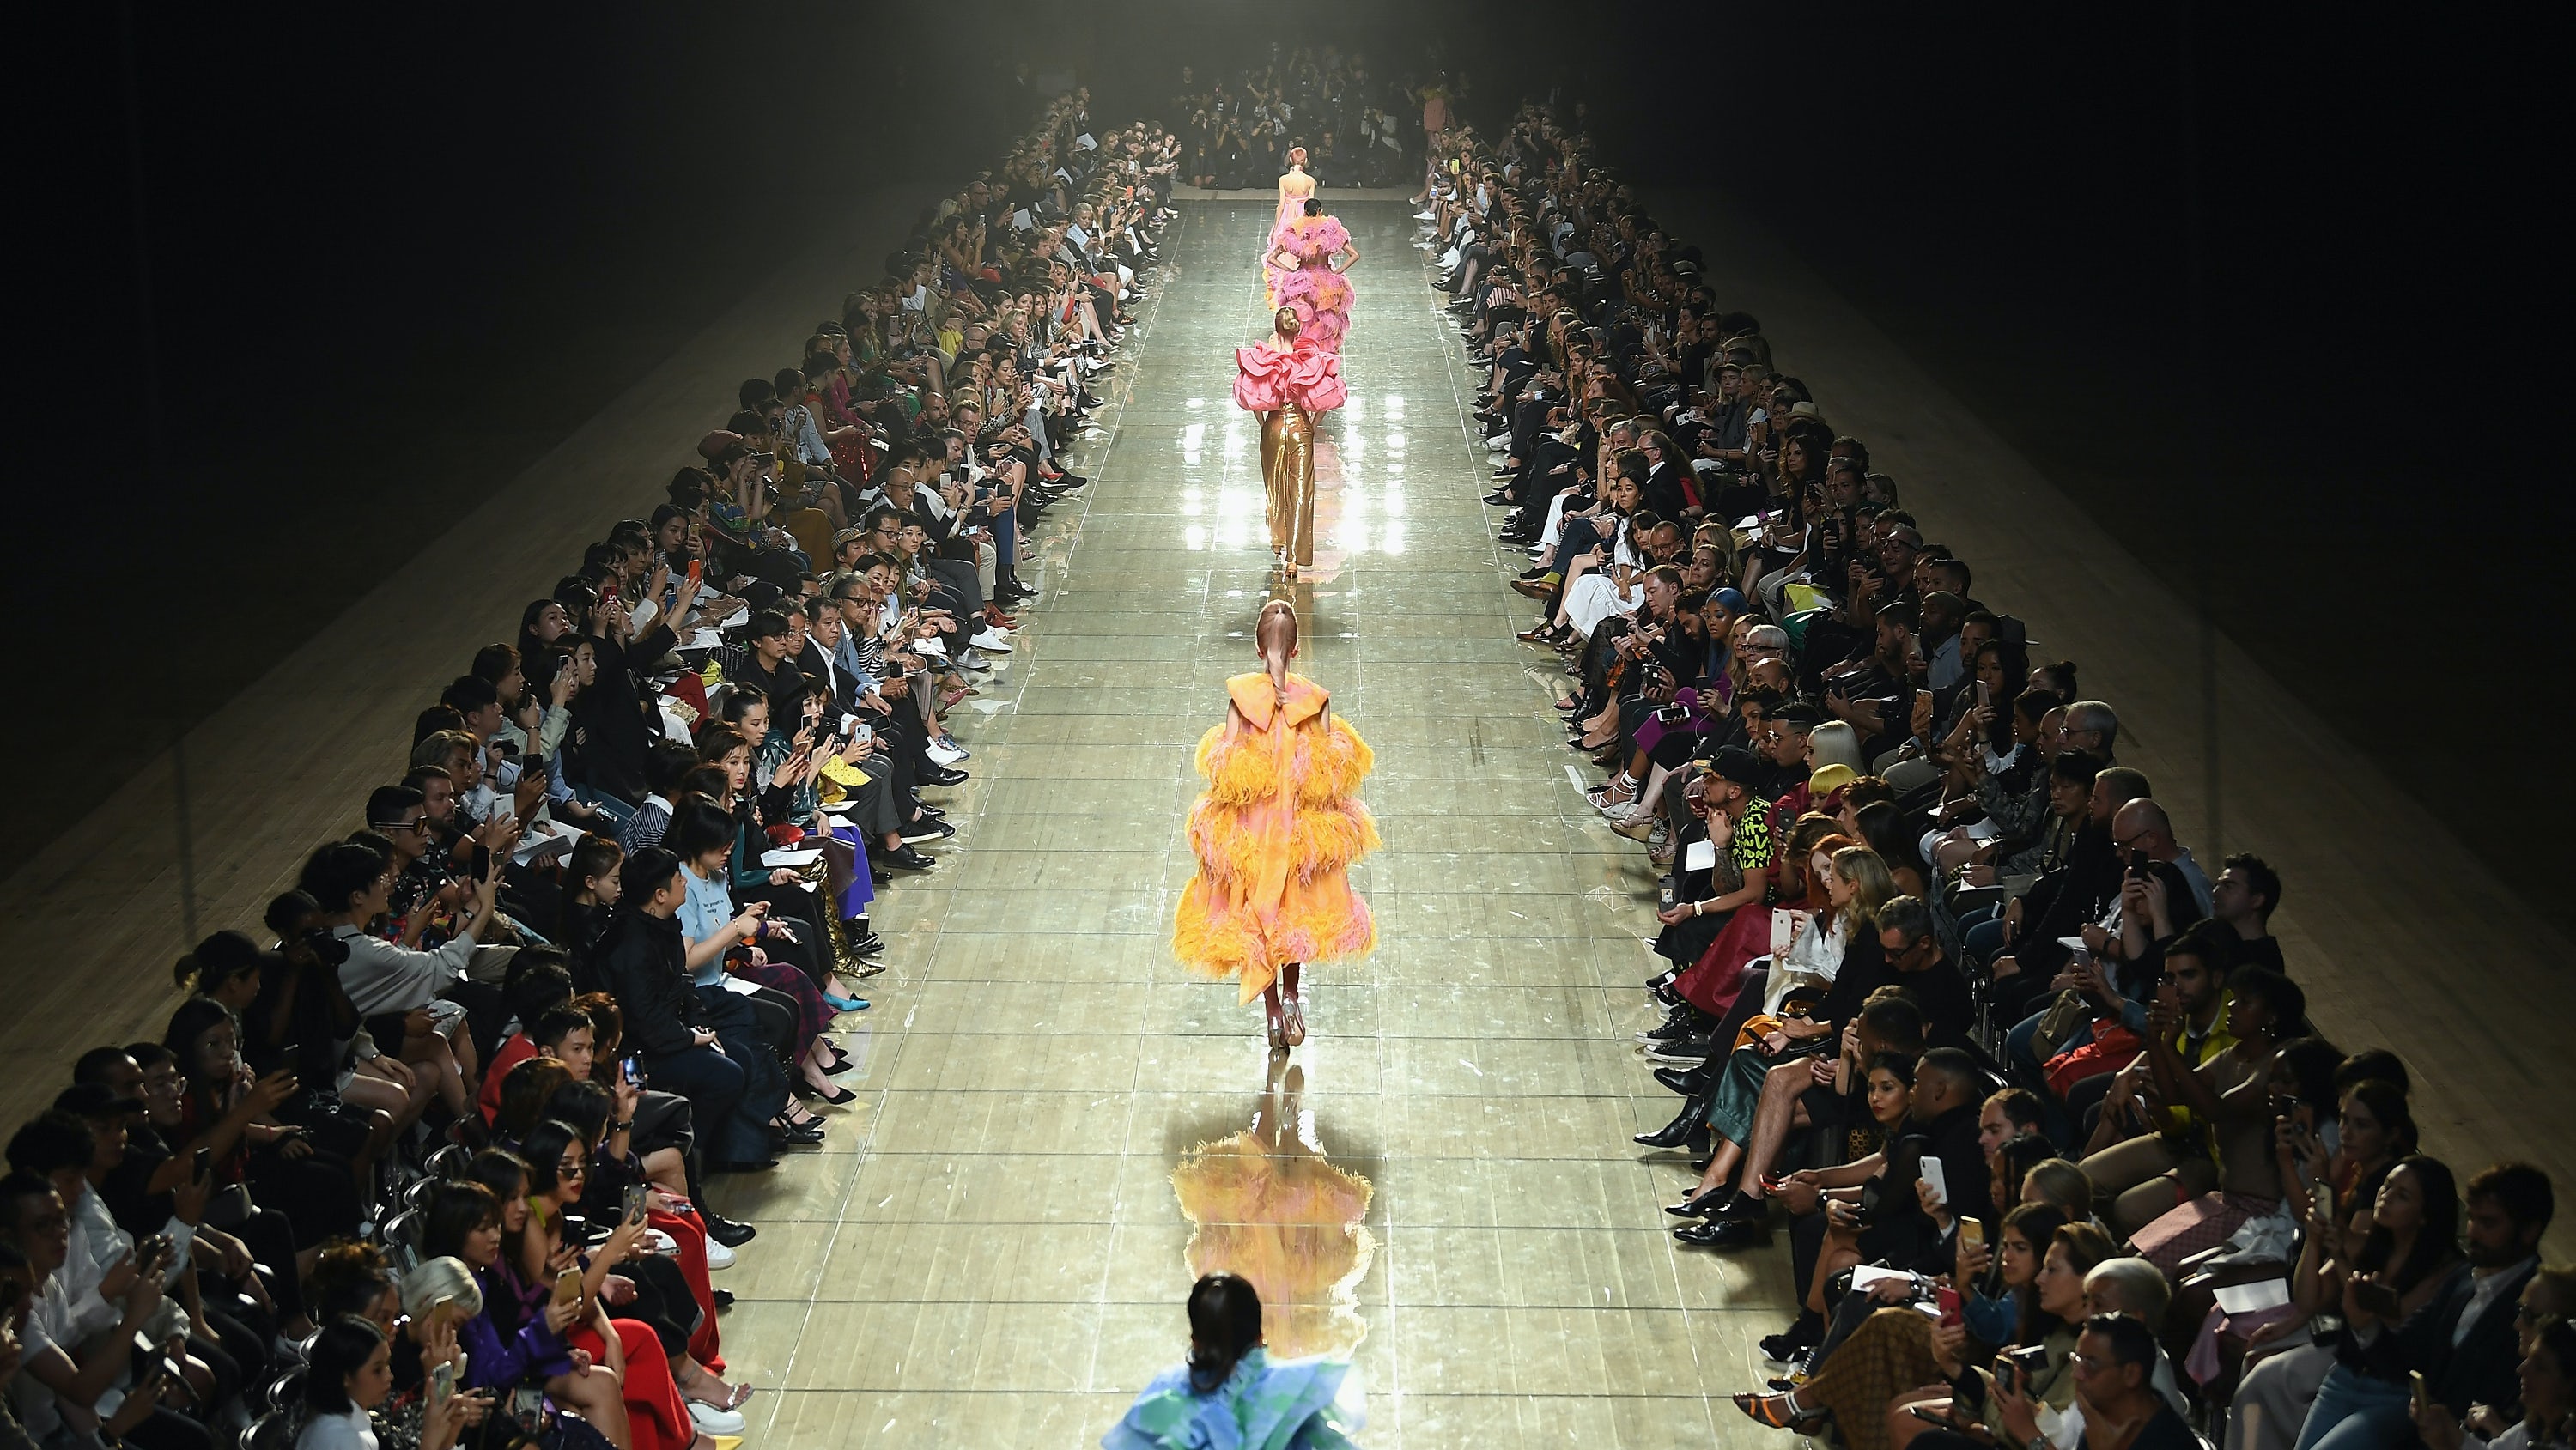 Donna Karan News, Collections, Fashion Shows, Fashion Week Reviews